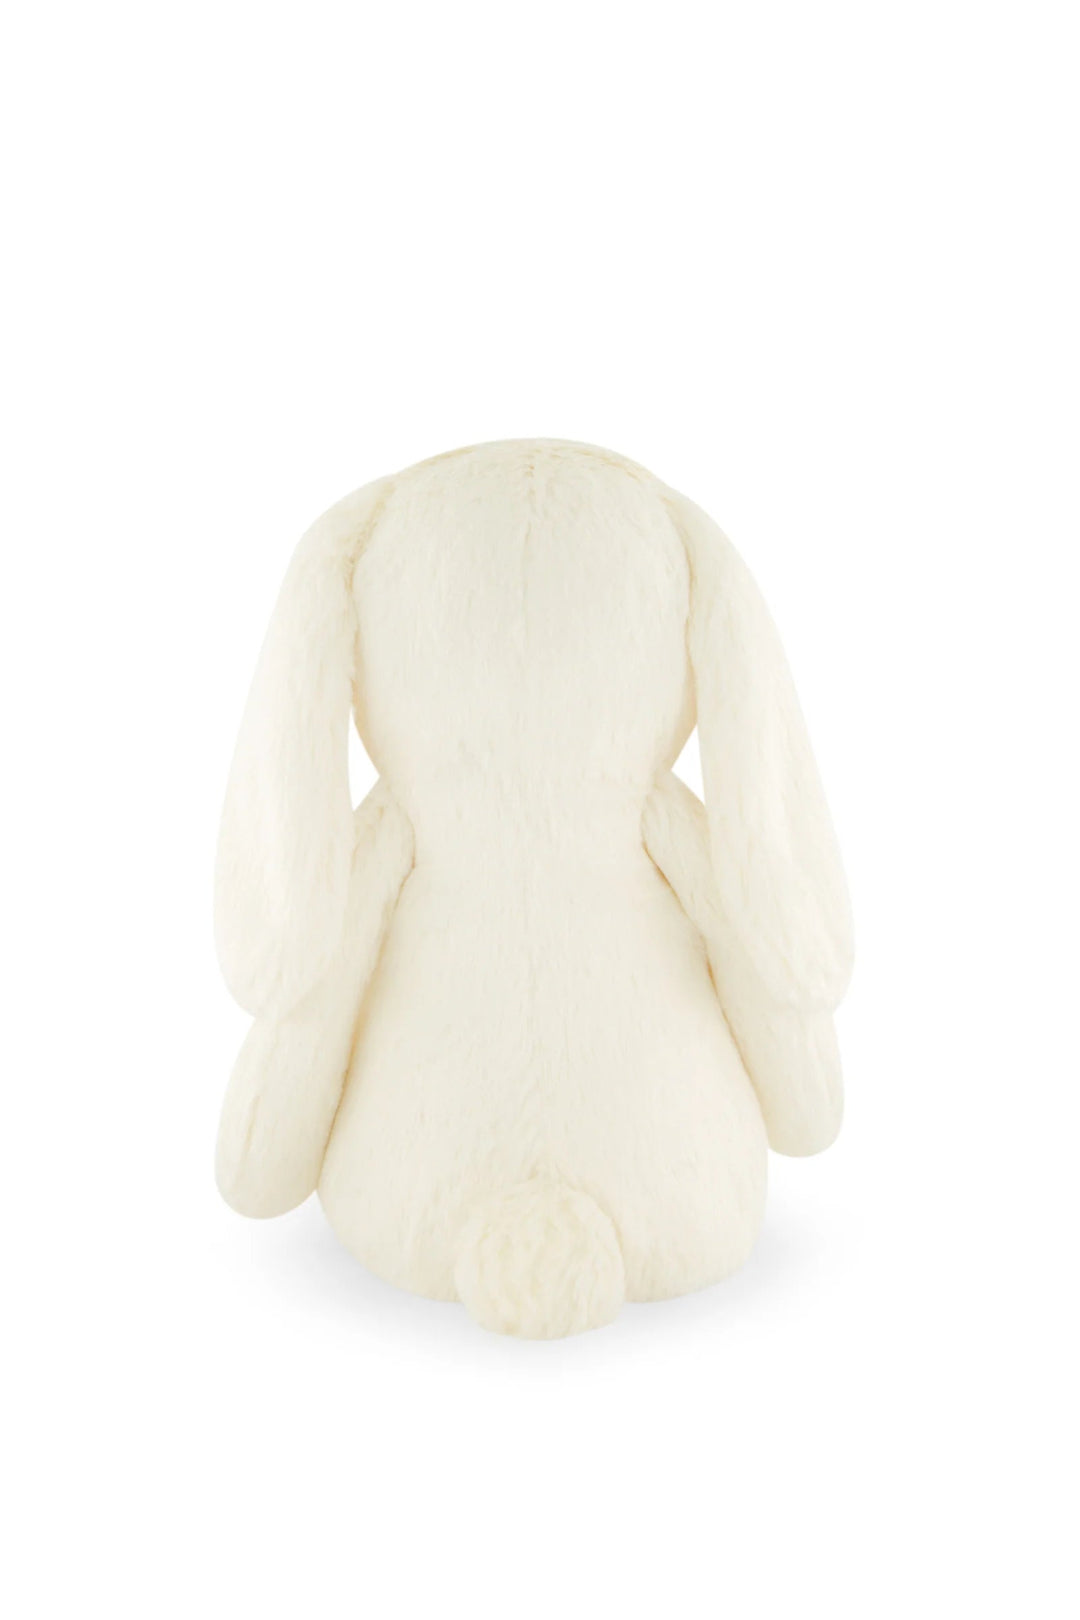 NEW Jamie Kay Snuggle Bunnies - Penelope The Bunny - Marshmallow - #HolaNanu#NDIS #creativekids